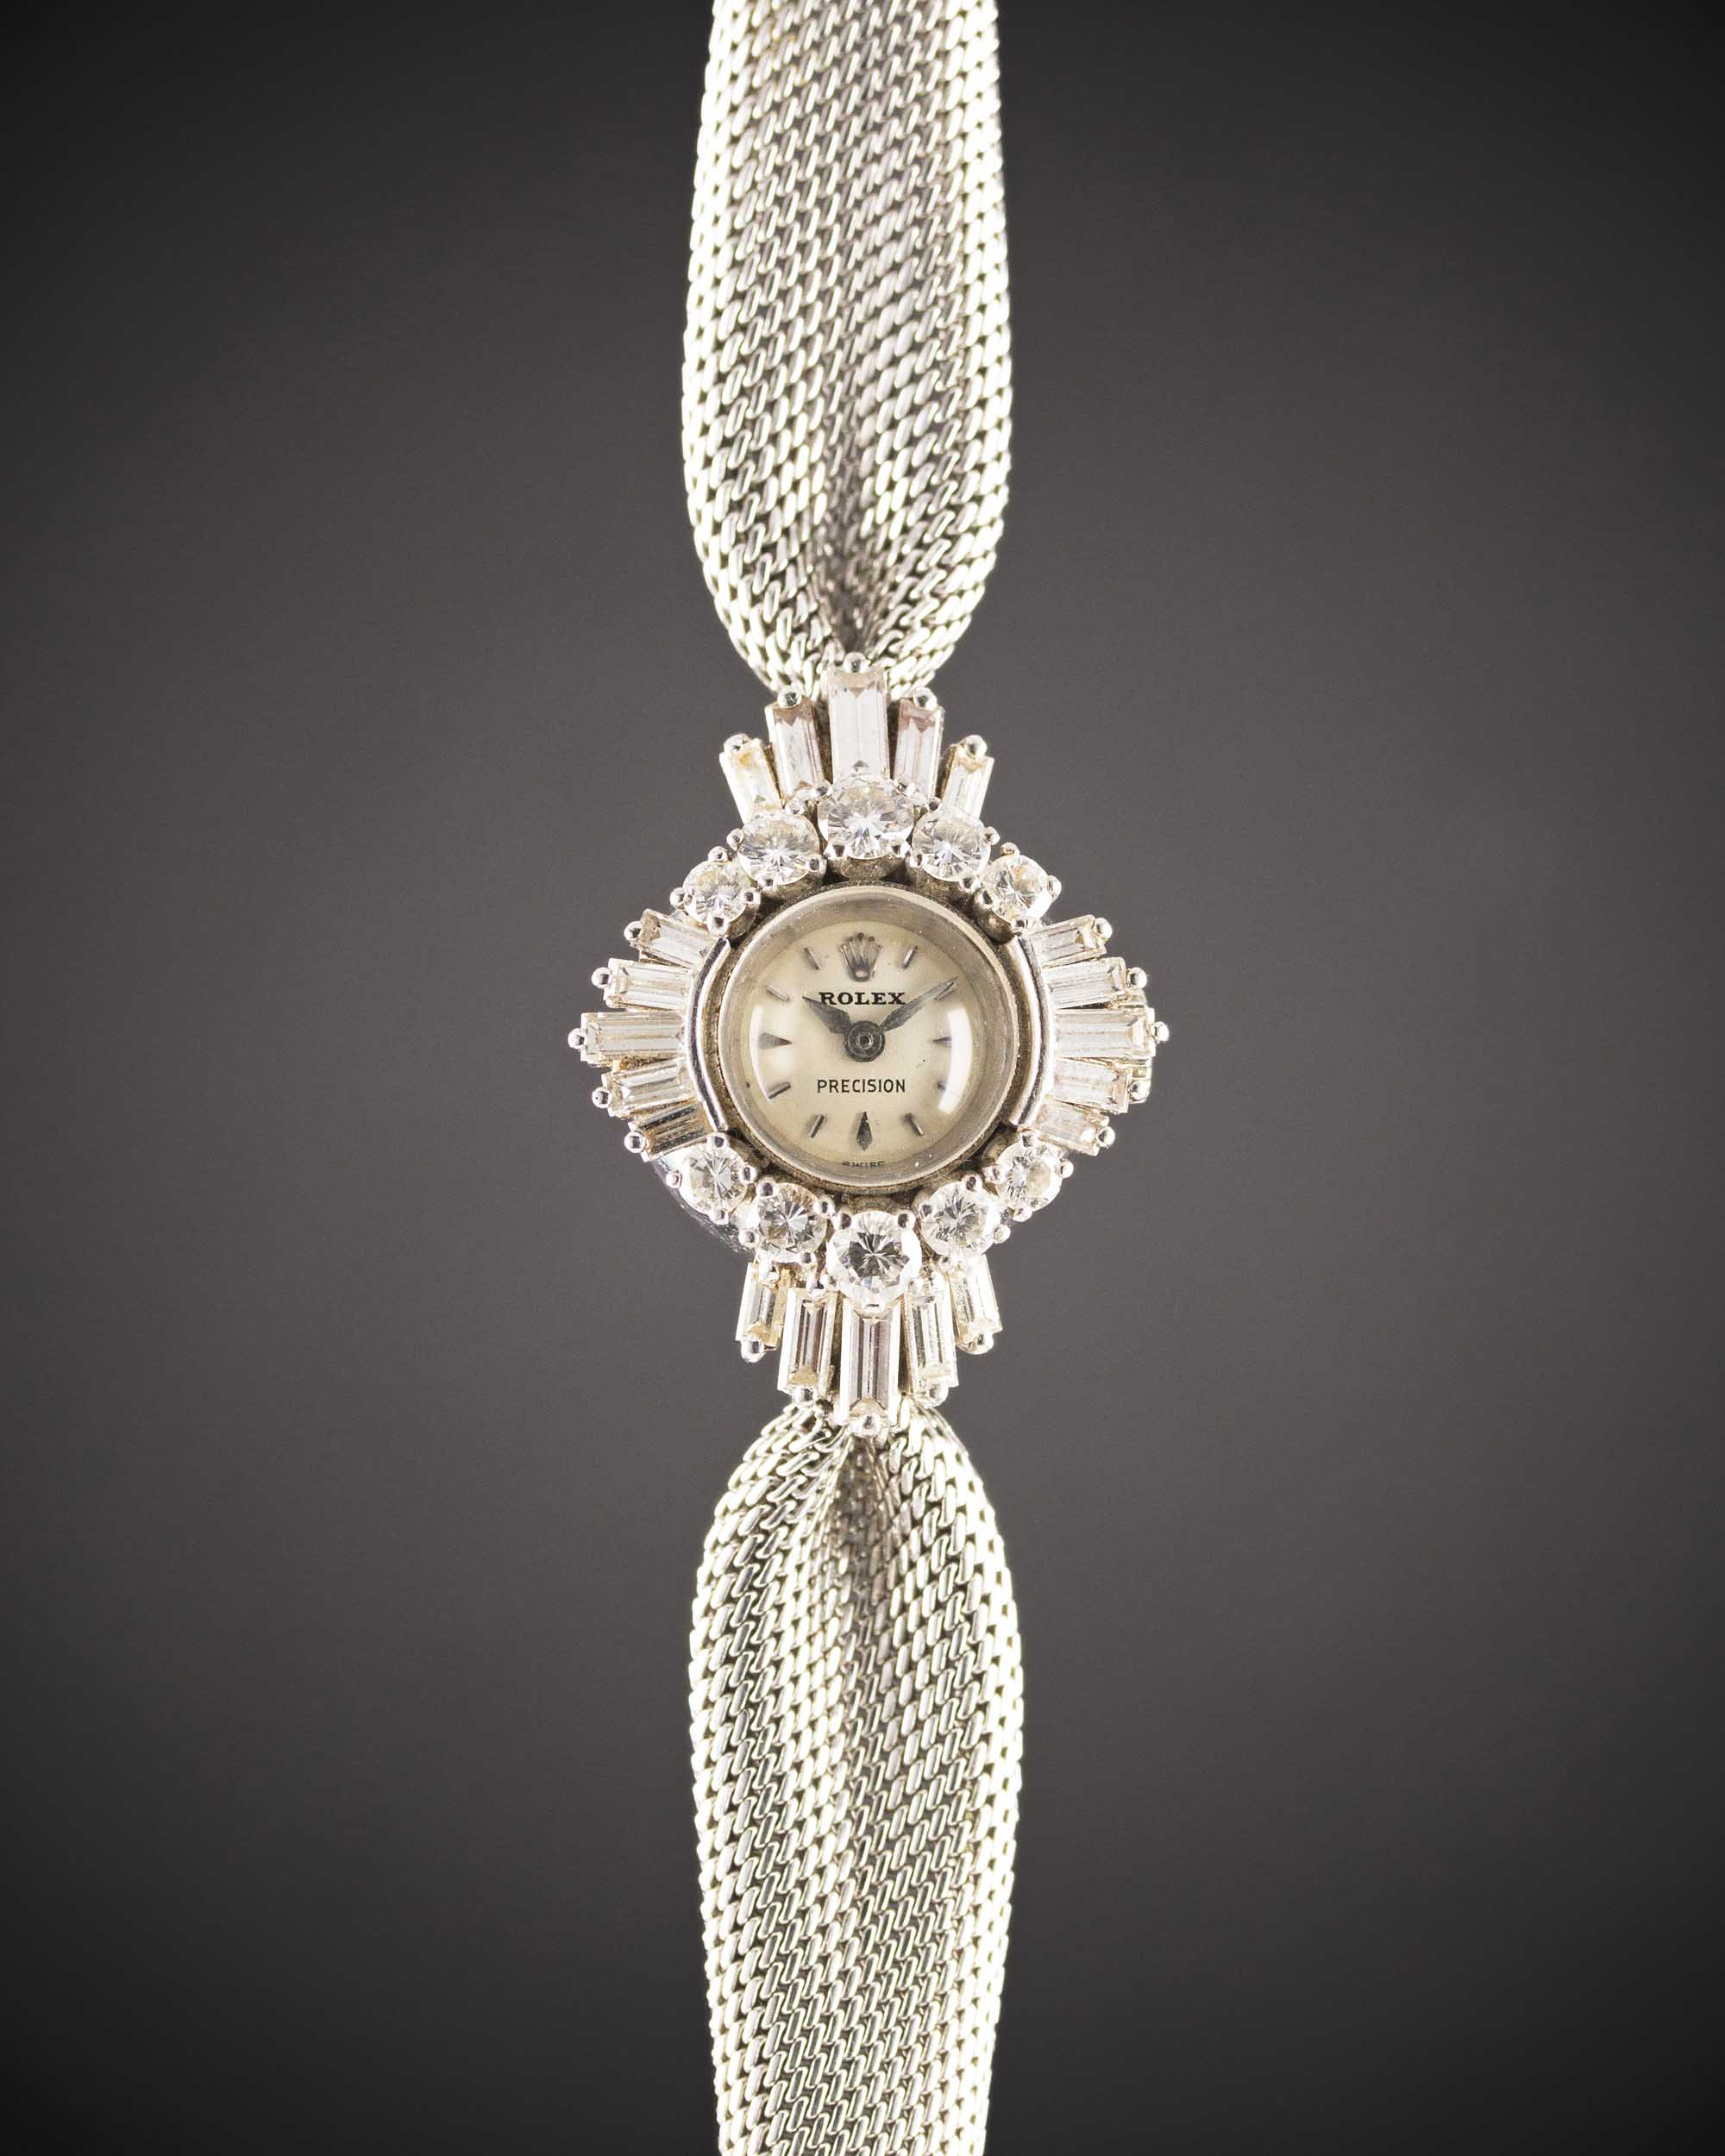 A FINE LADIES 18K SOLID WHITE GOLD & DIAMOND ROLEX PRECISION COCKTAIL BRACELET WATCH CIRCA 1960, - Image 2 of 2